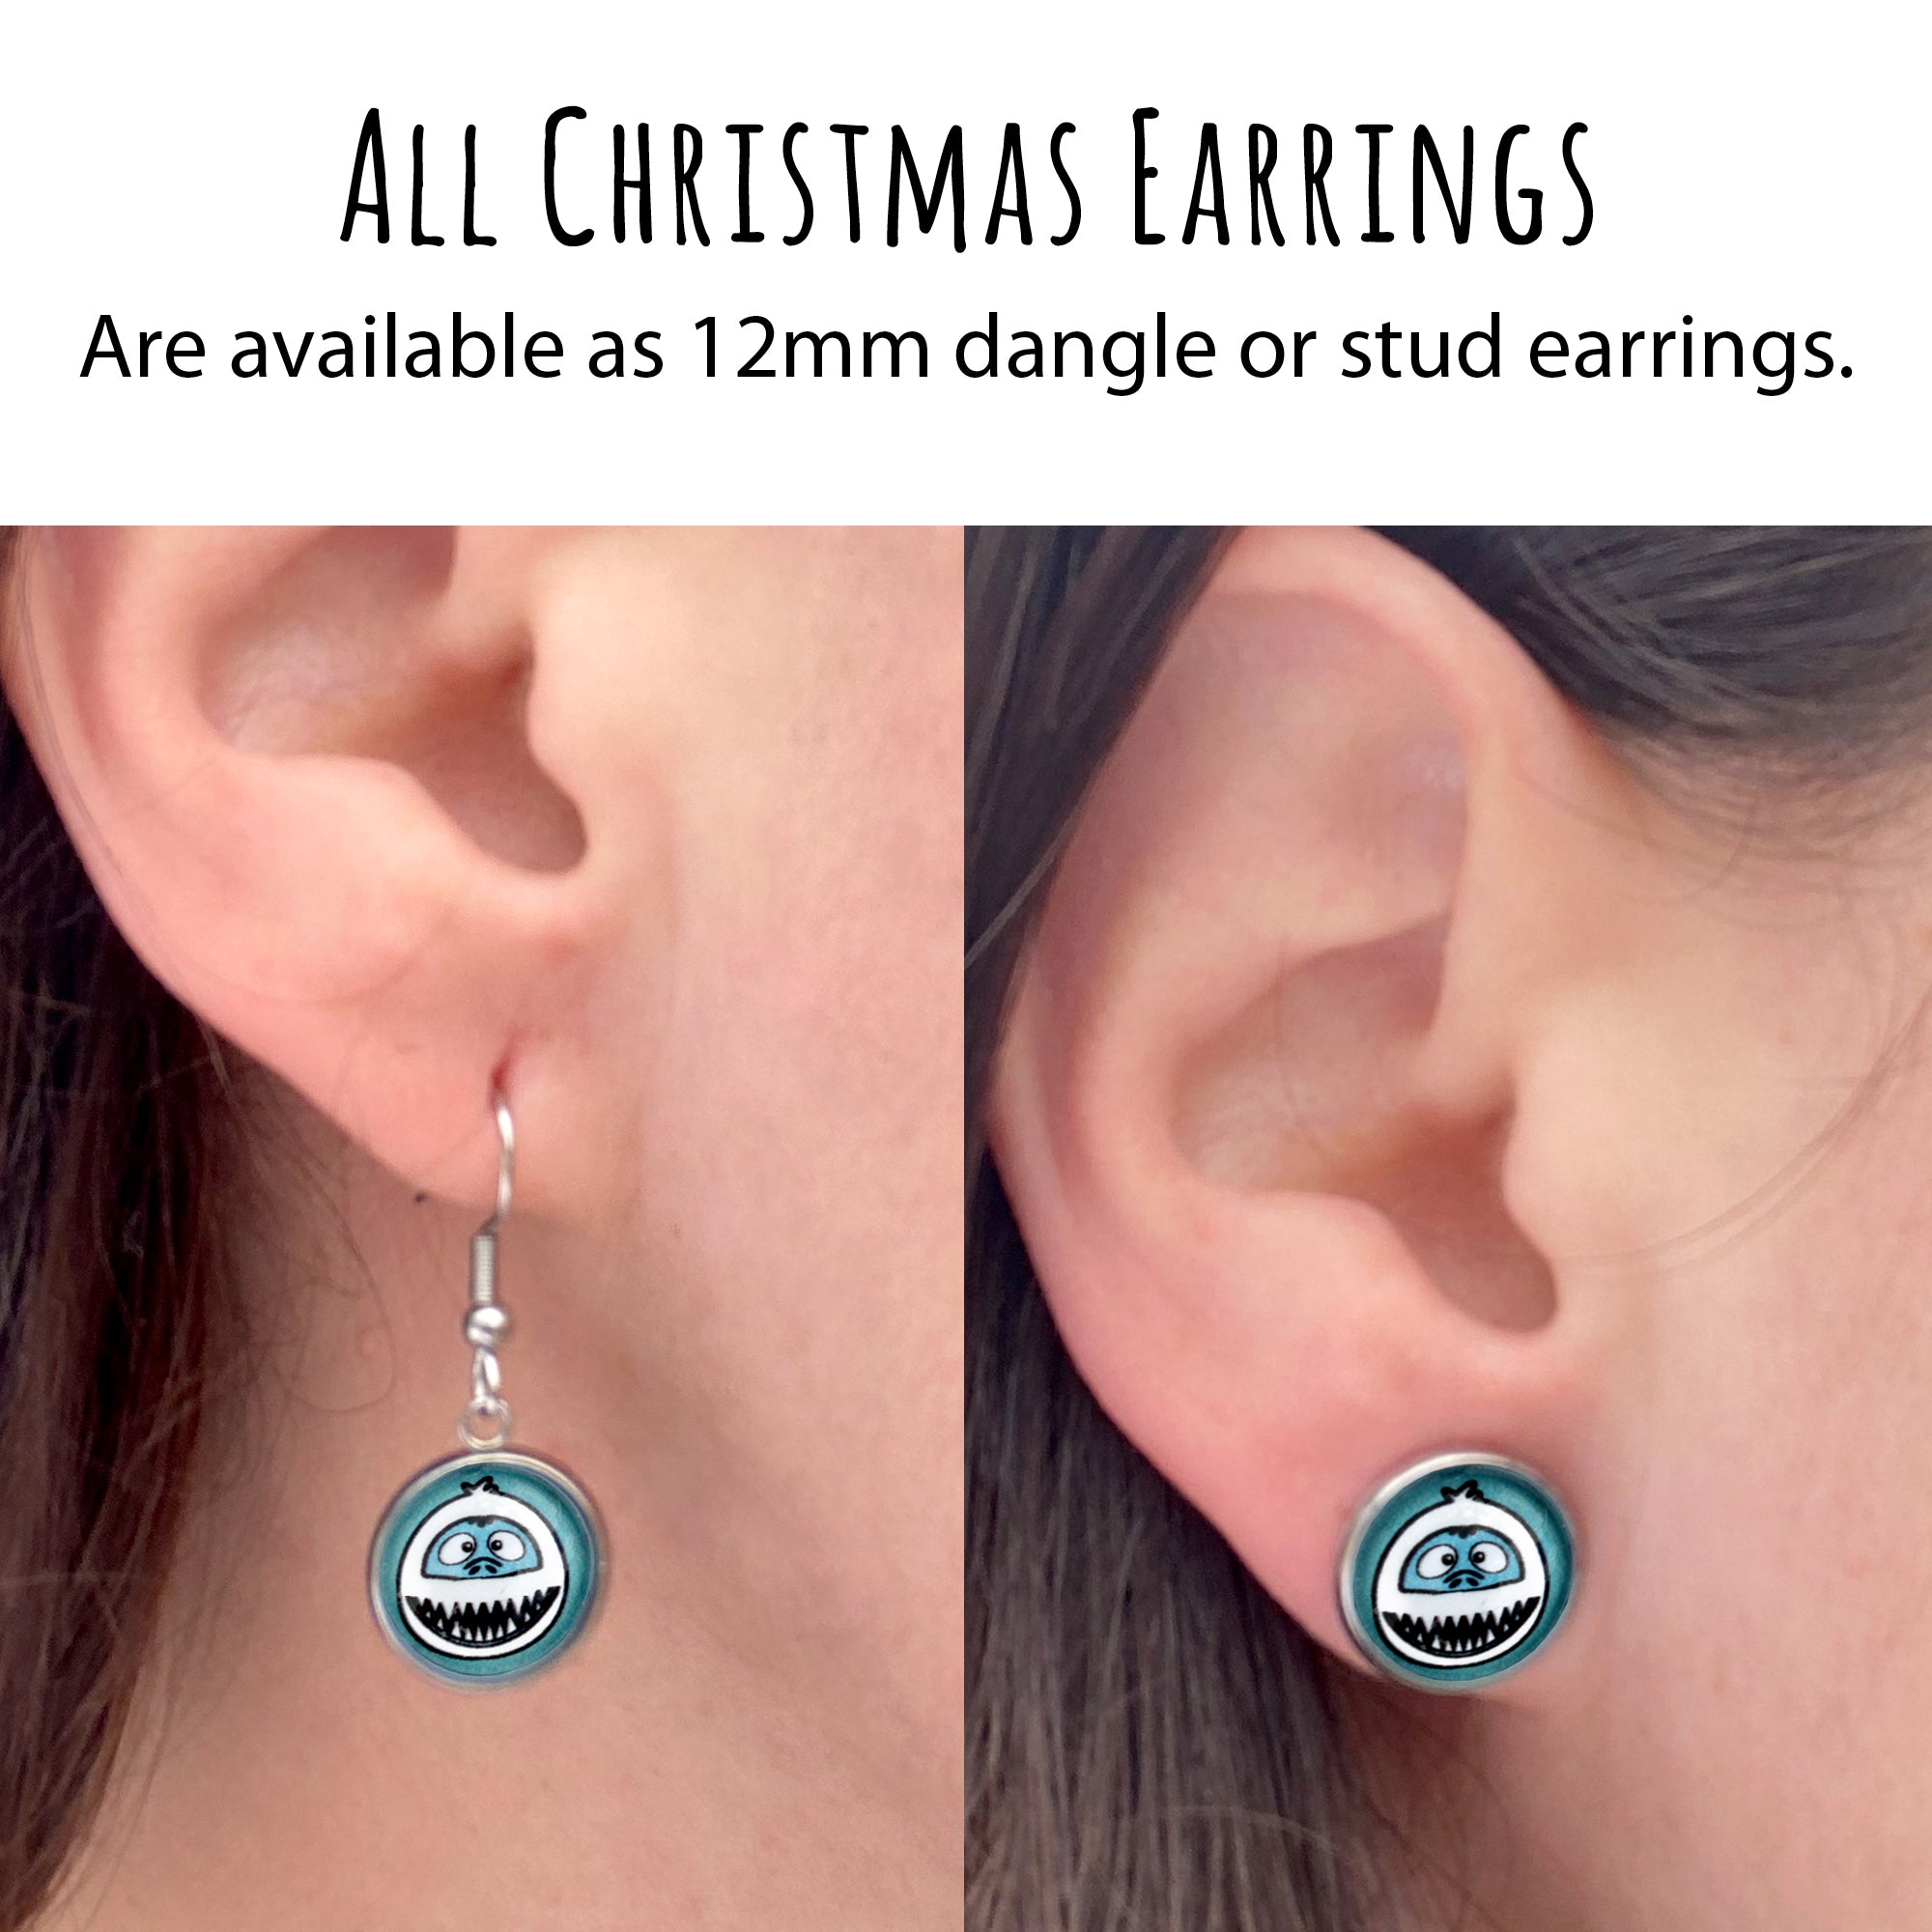 Mrs Claus Christmas Dangle Earrings